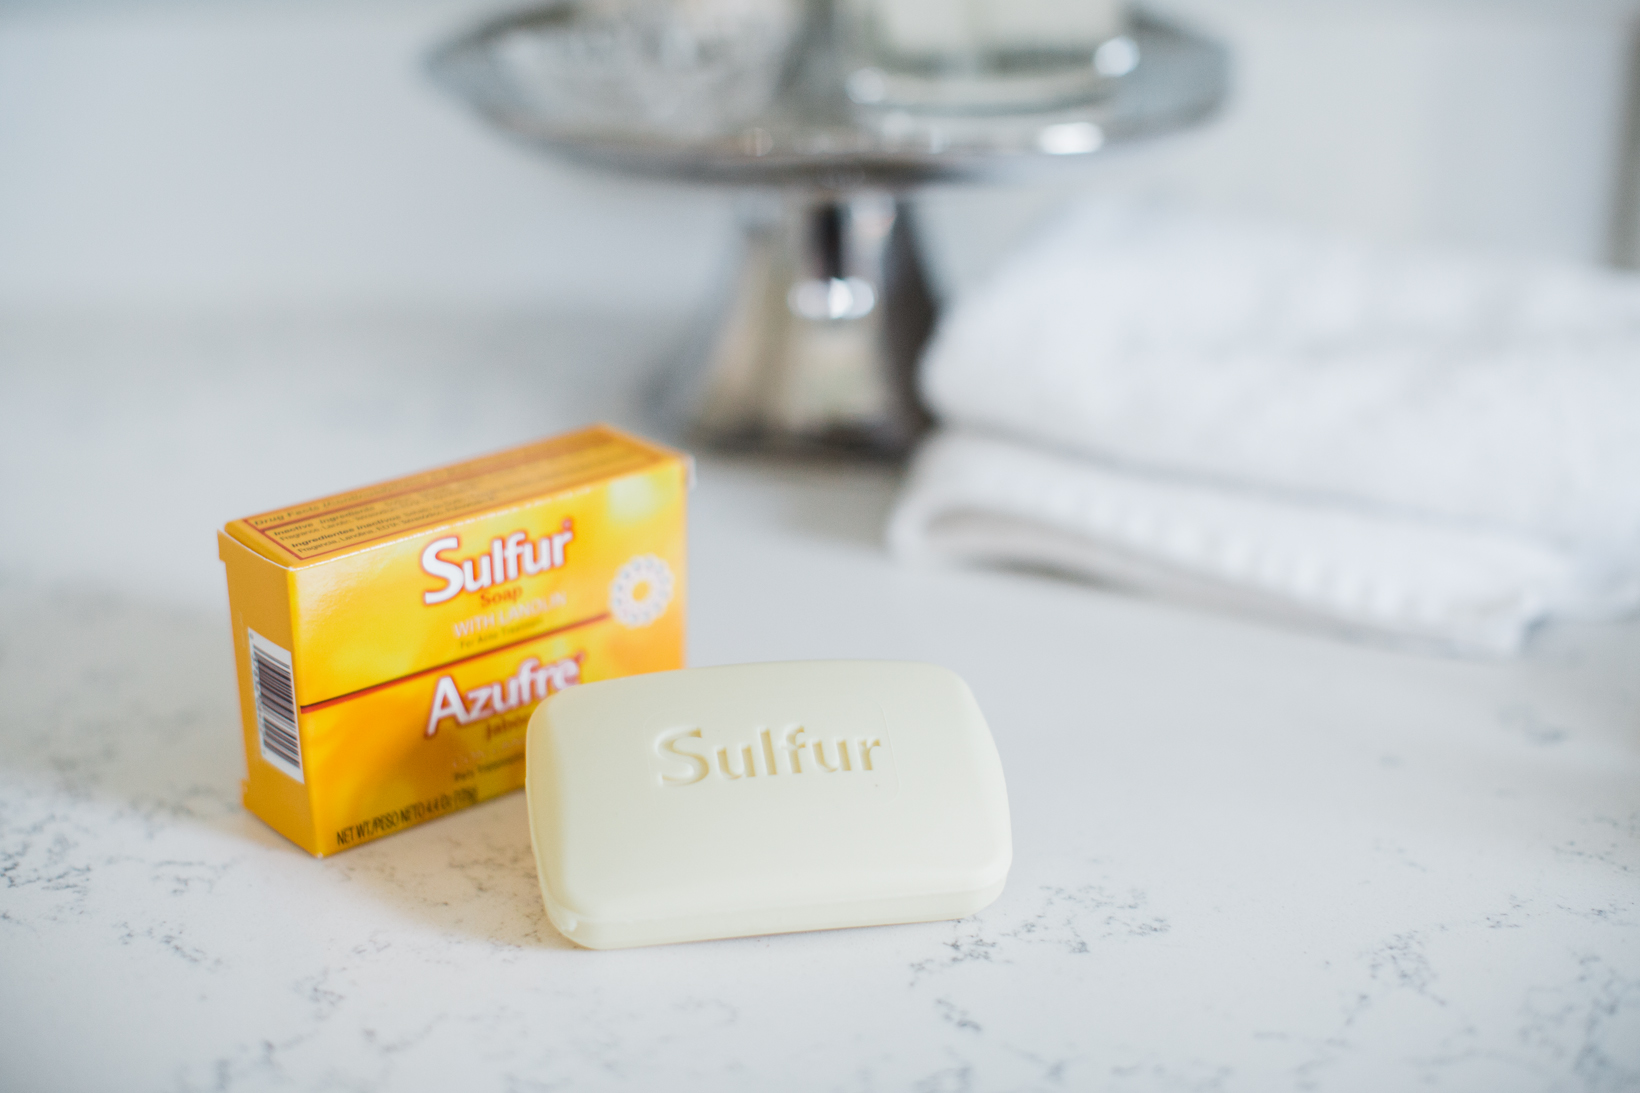 Sulfar soap